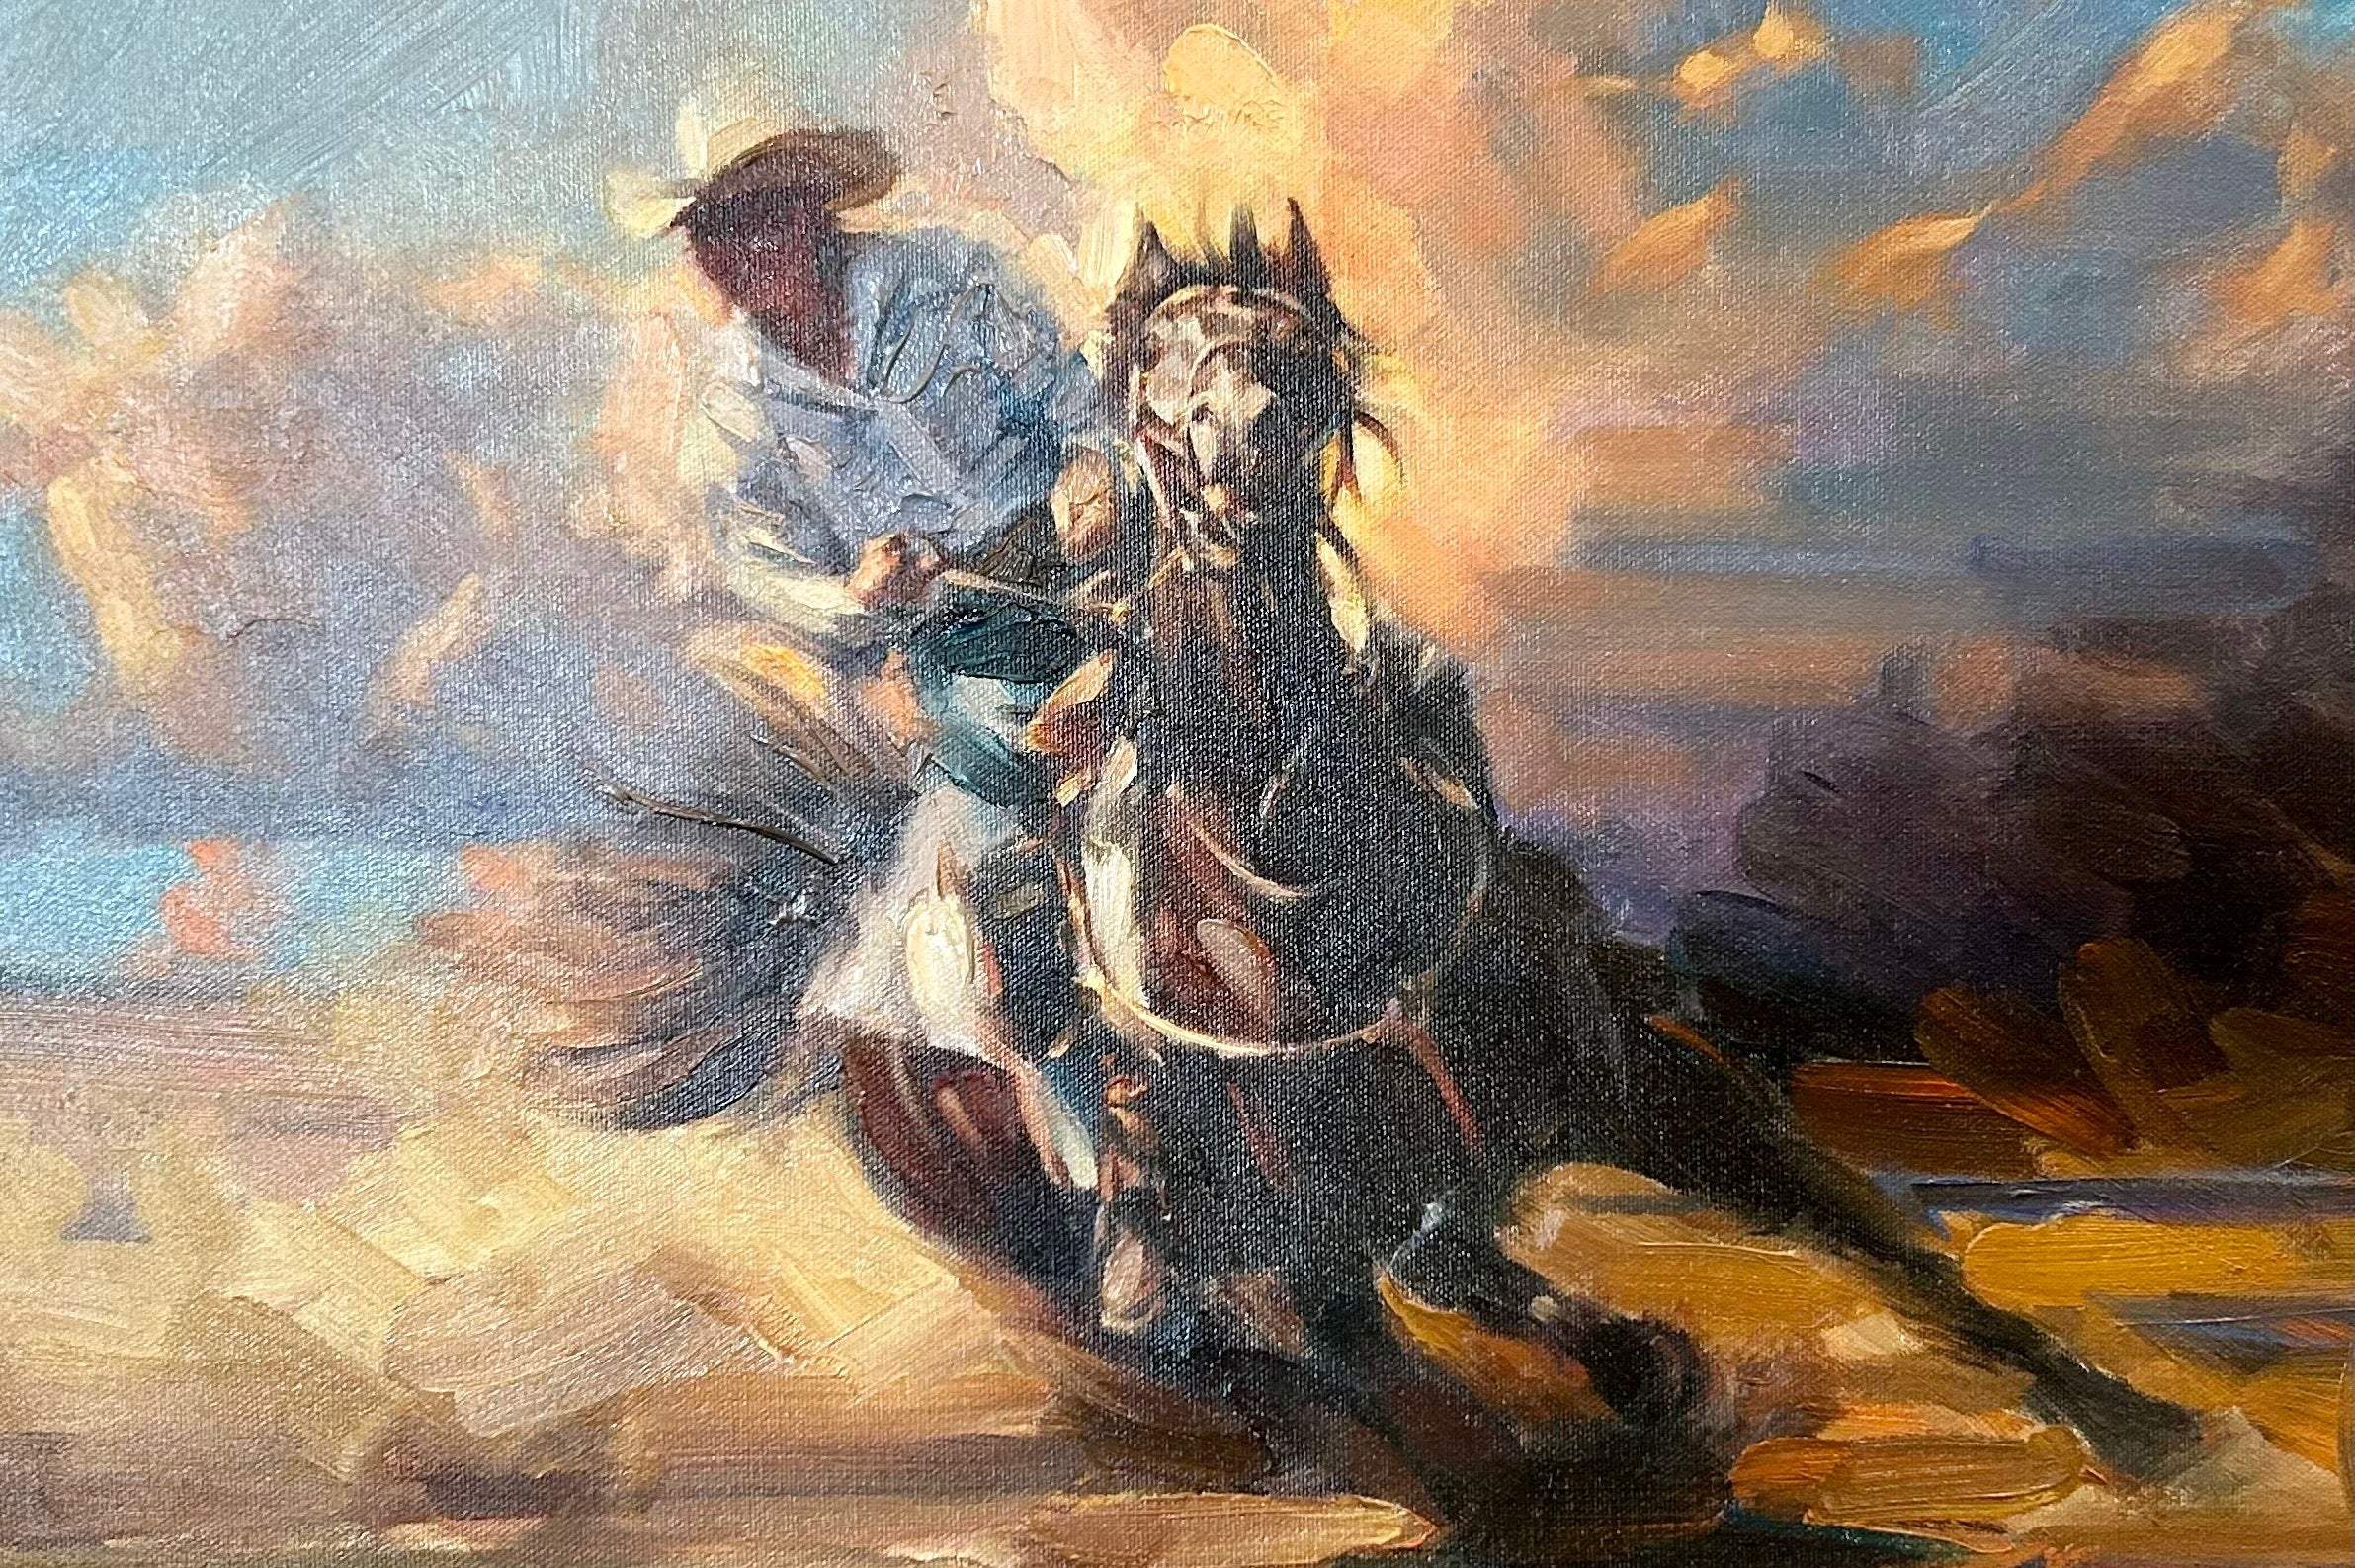 Cowboys don’t cry - Artist by Davina Dell Design - Art Prints, Decoupage Rice Paper, Flat Canvas Prints, Giclee Prints, Photo Prints, Poster Prints